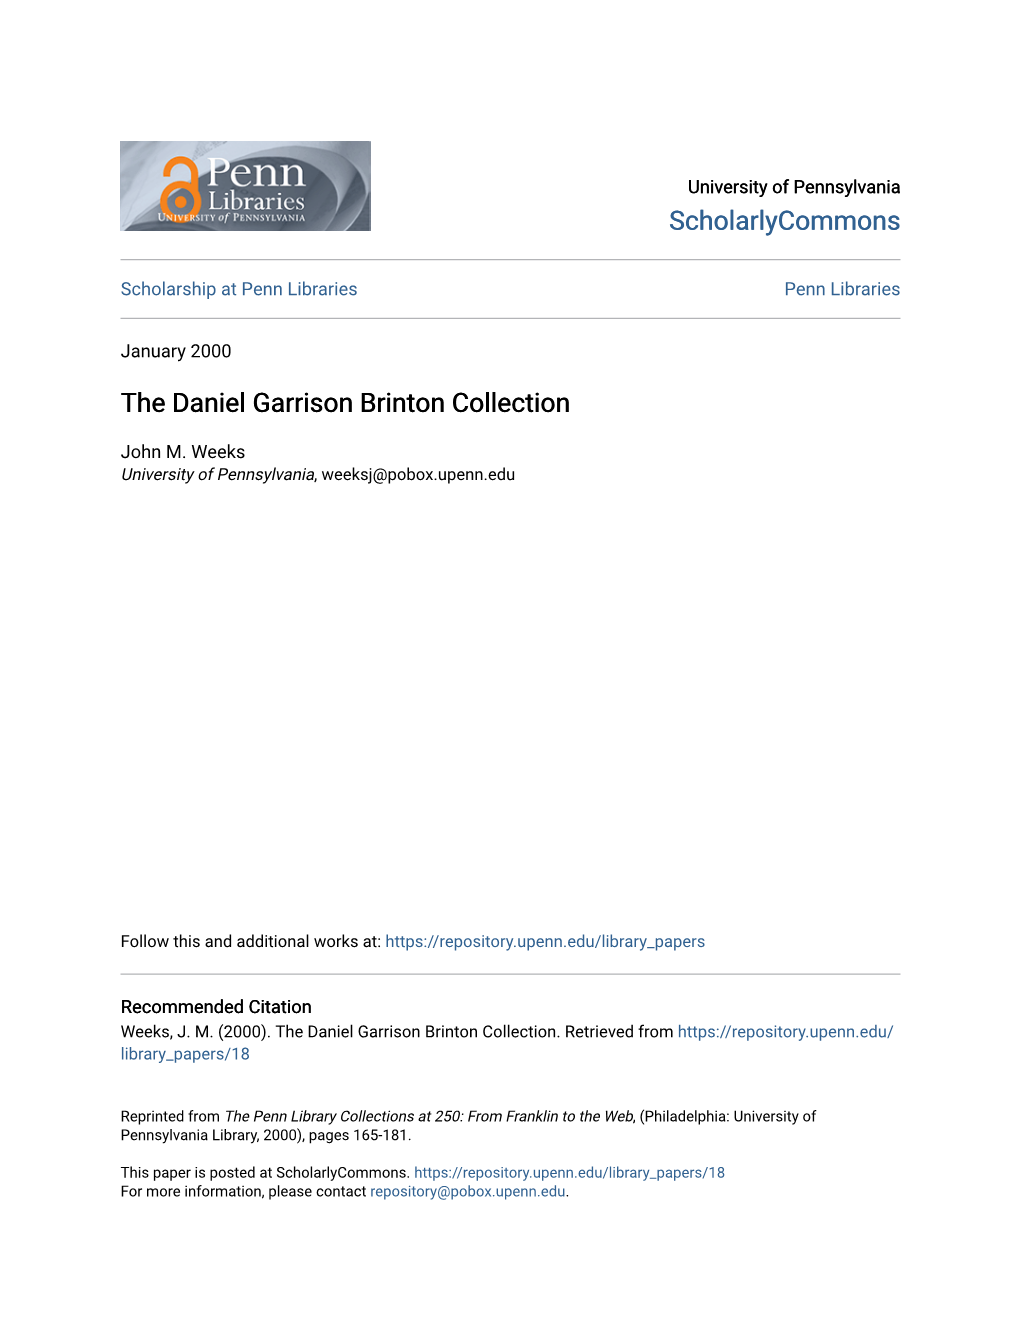 The Daniel Garrison Brinton Collection